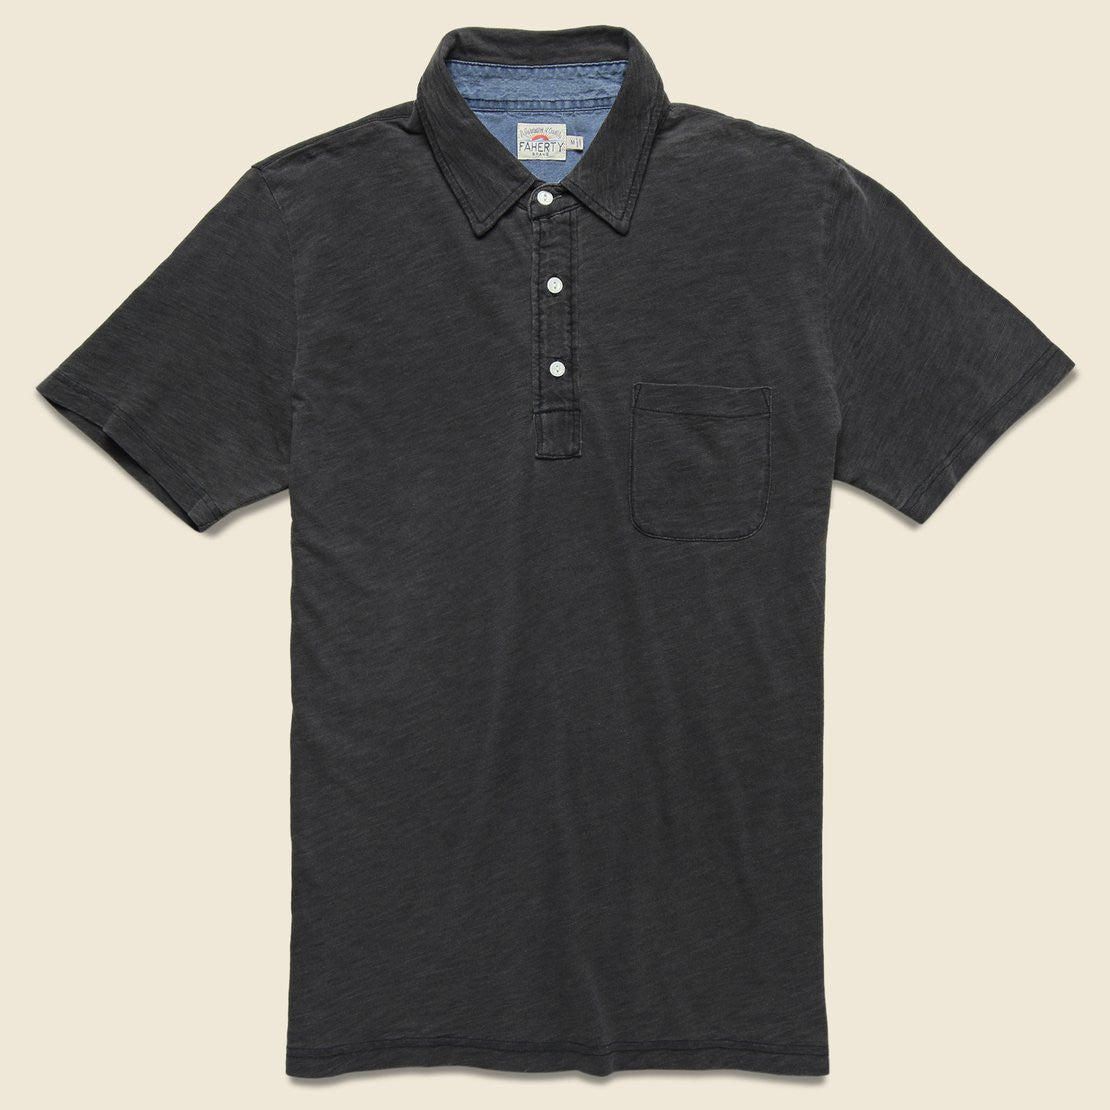 Faherty Indigo Dyed Polo Shirt - Black Wash